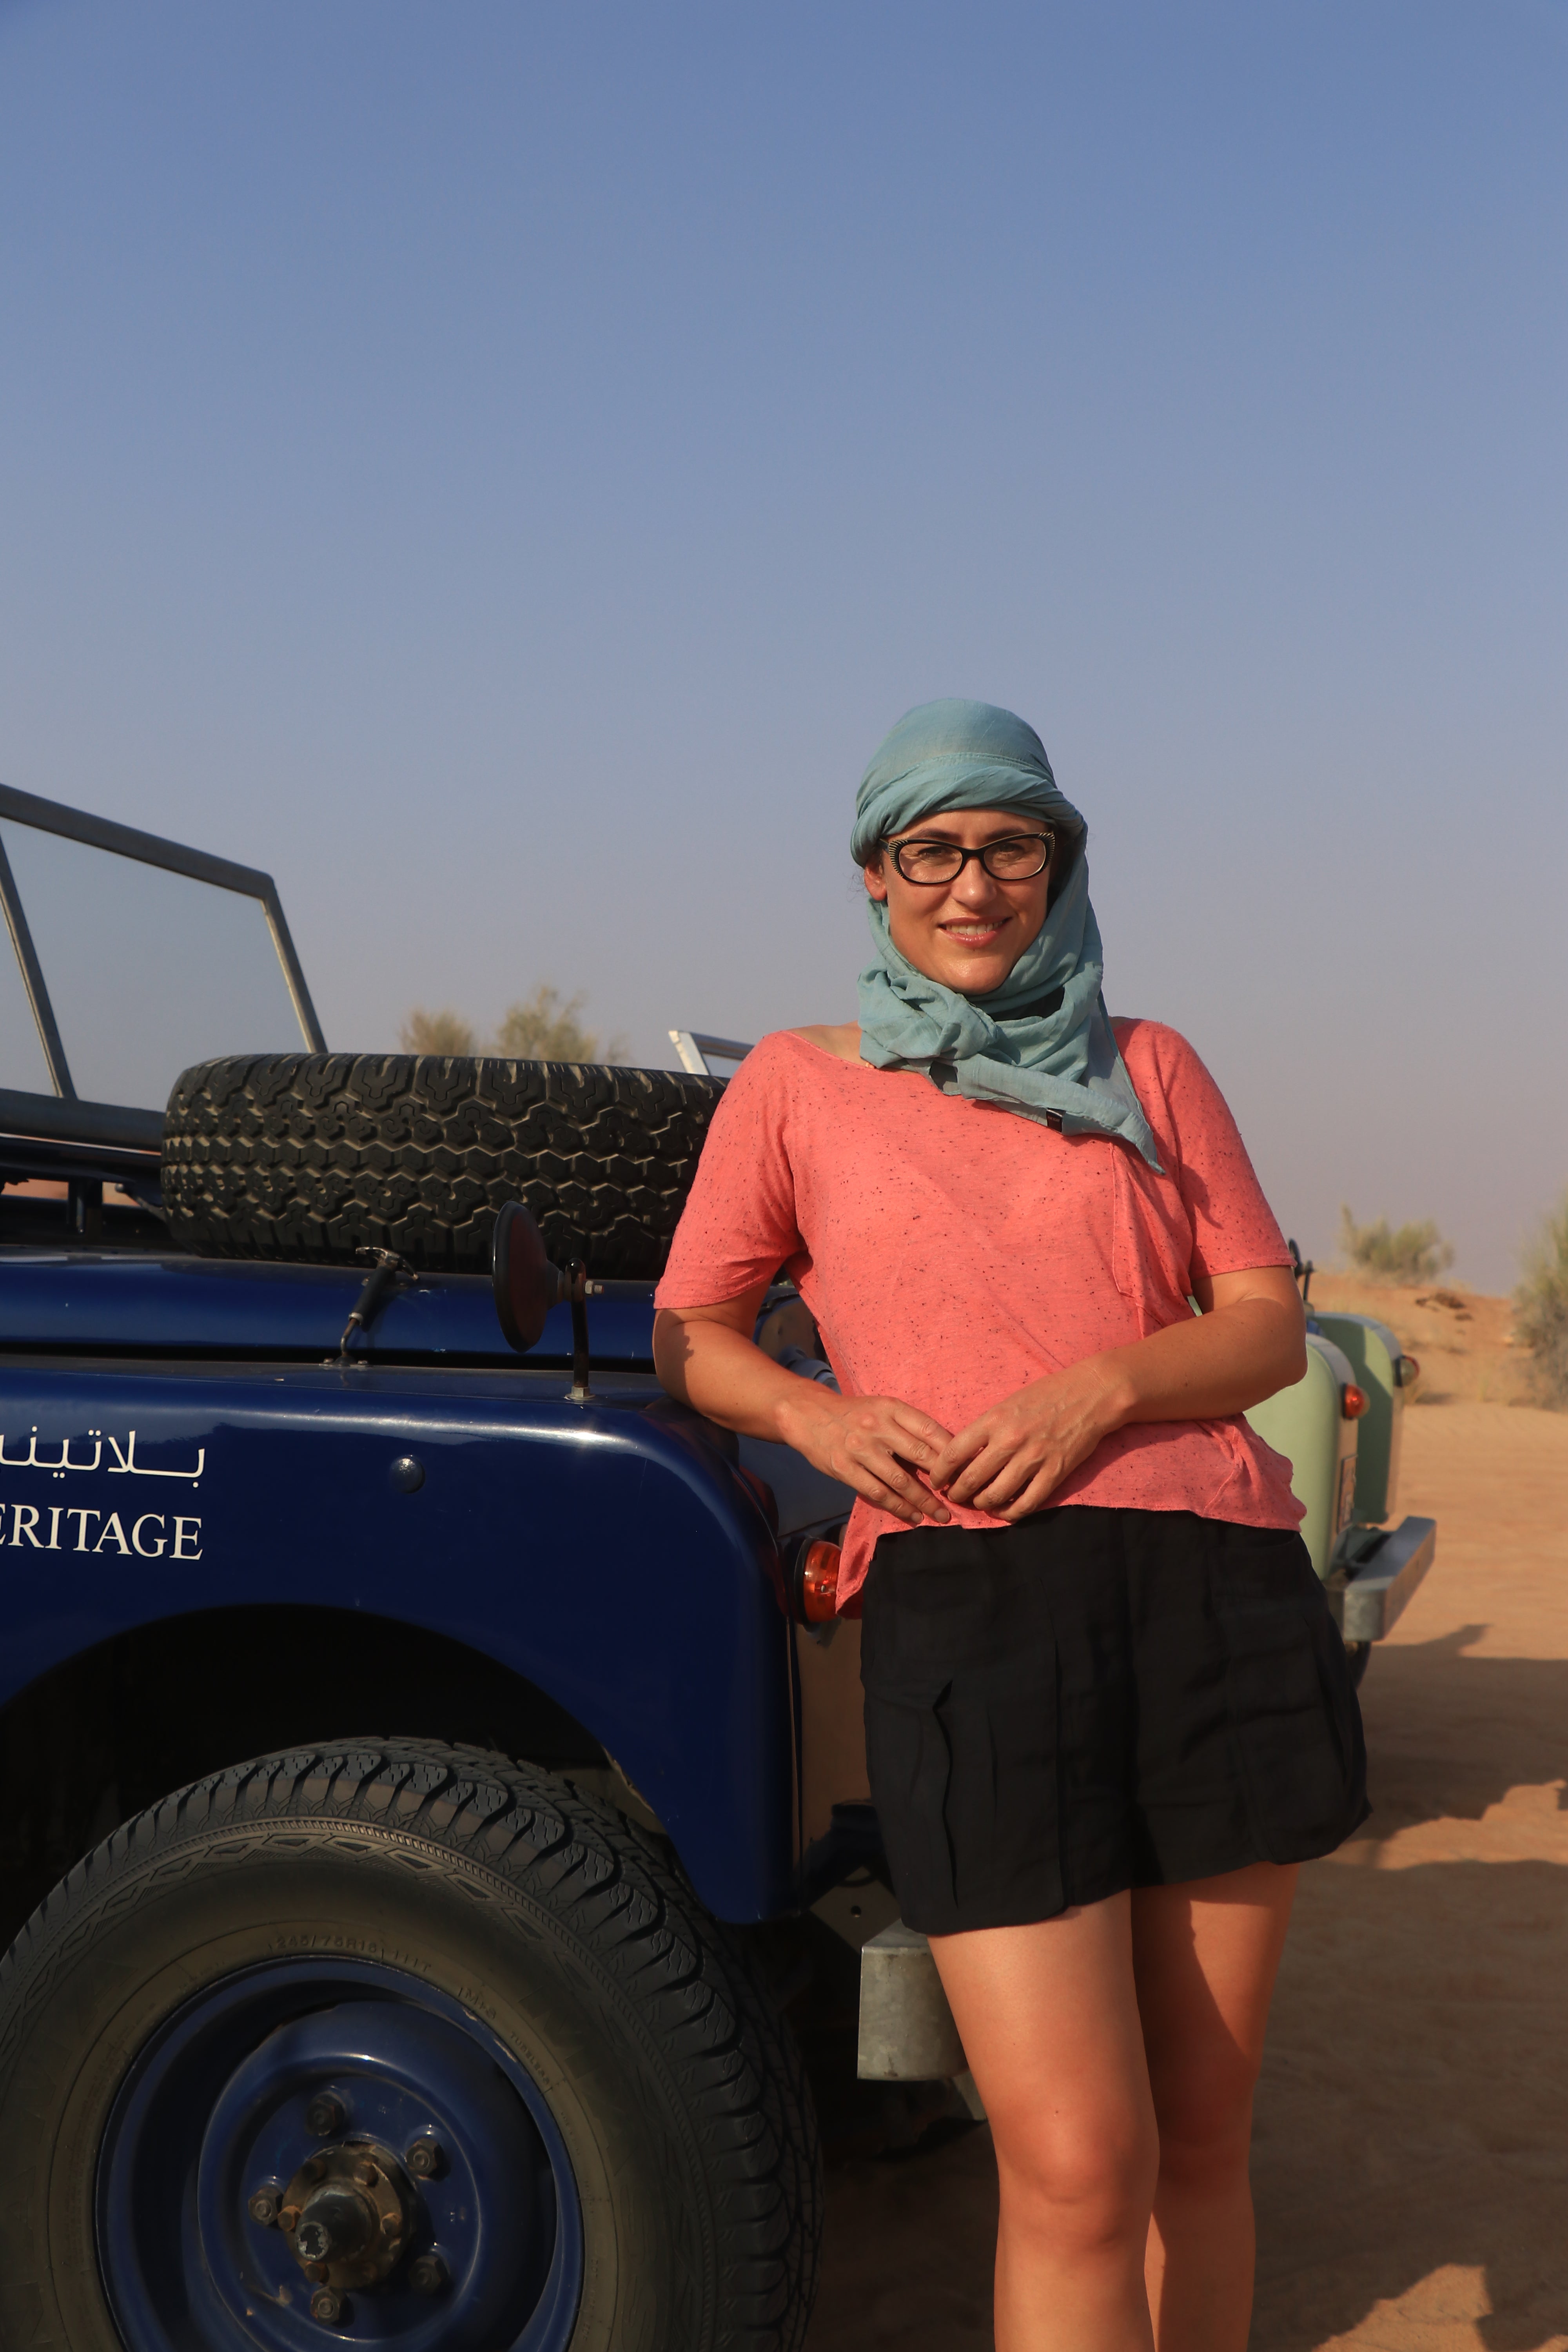 Sarah on a desert safari with Platinum Heritage (Platinum Heritage/PA)